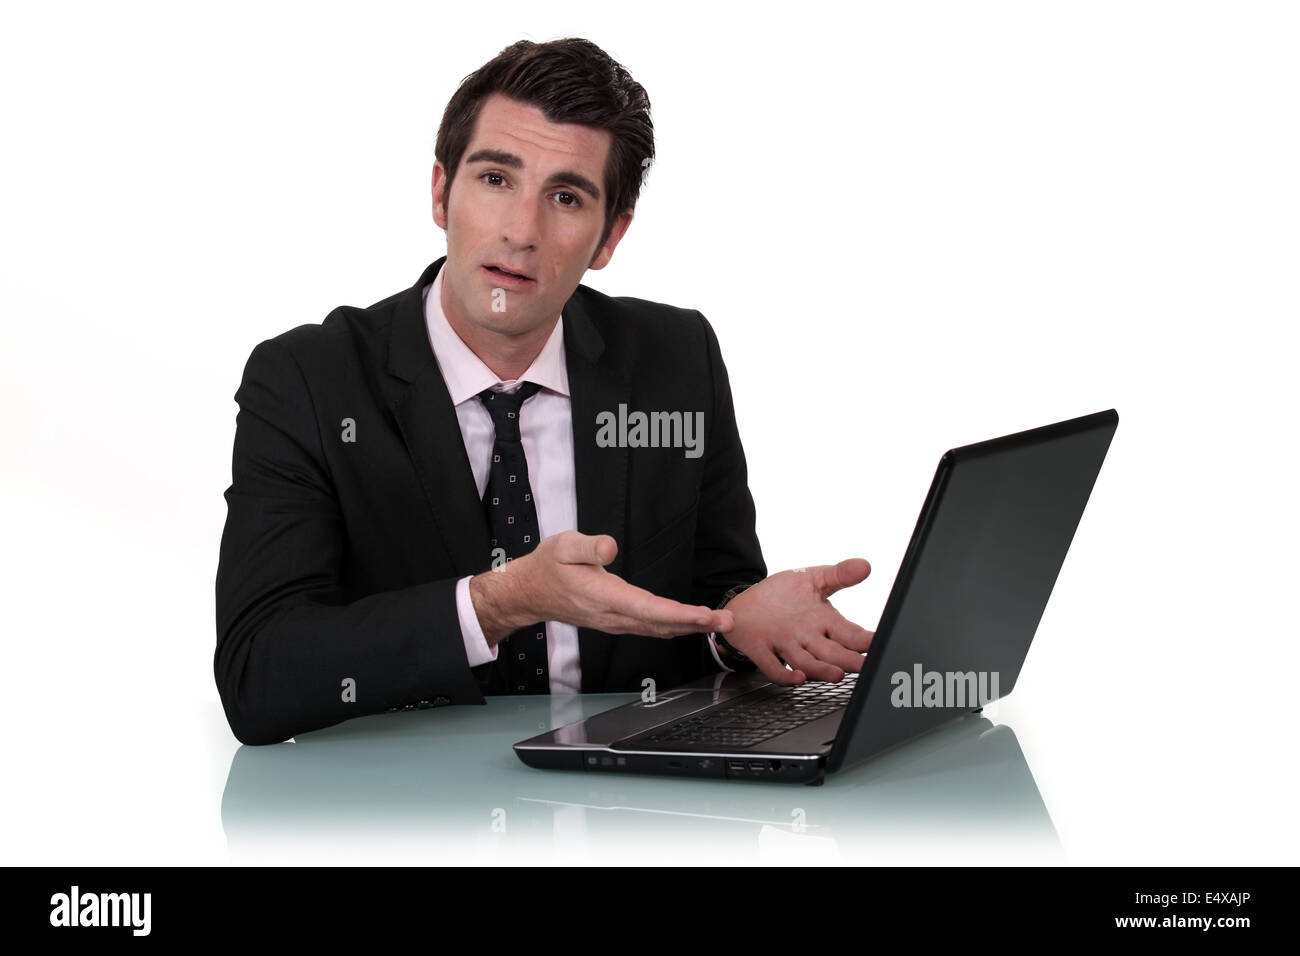 Man demonstrating a laptop Stock Photo